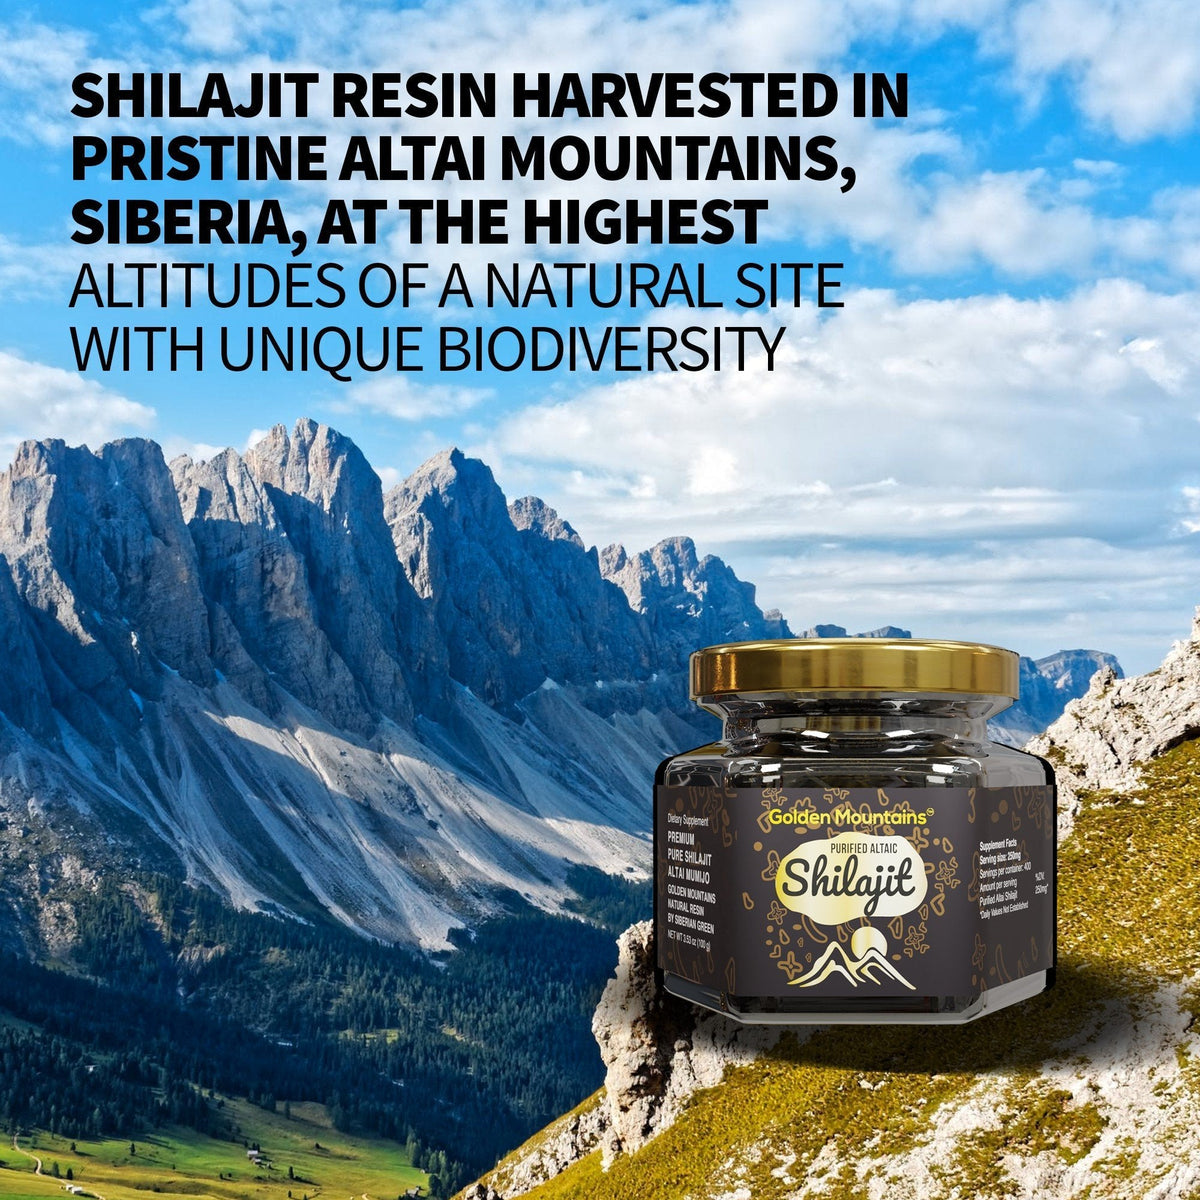 Golden Mountains Shilajit Harz Premium Pure Authentic Siberian Altai 100g - Messlöffel - Exklusives Qualitätszertifikat